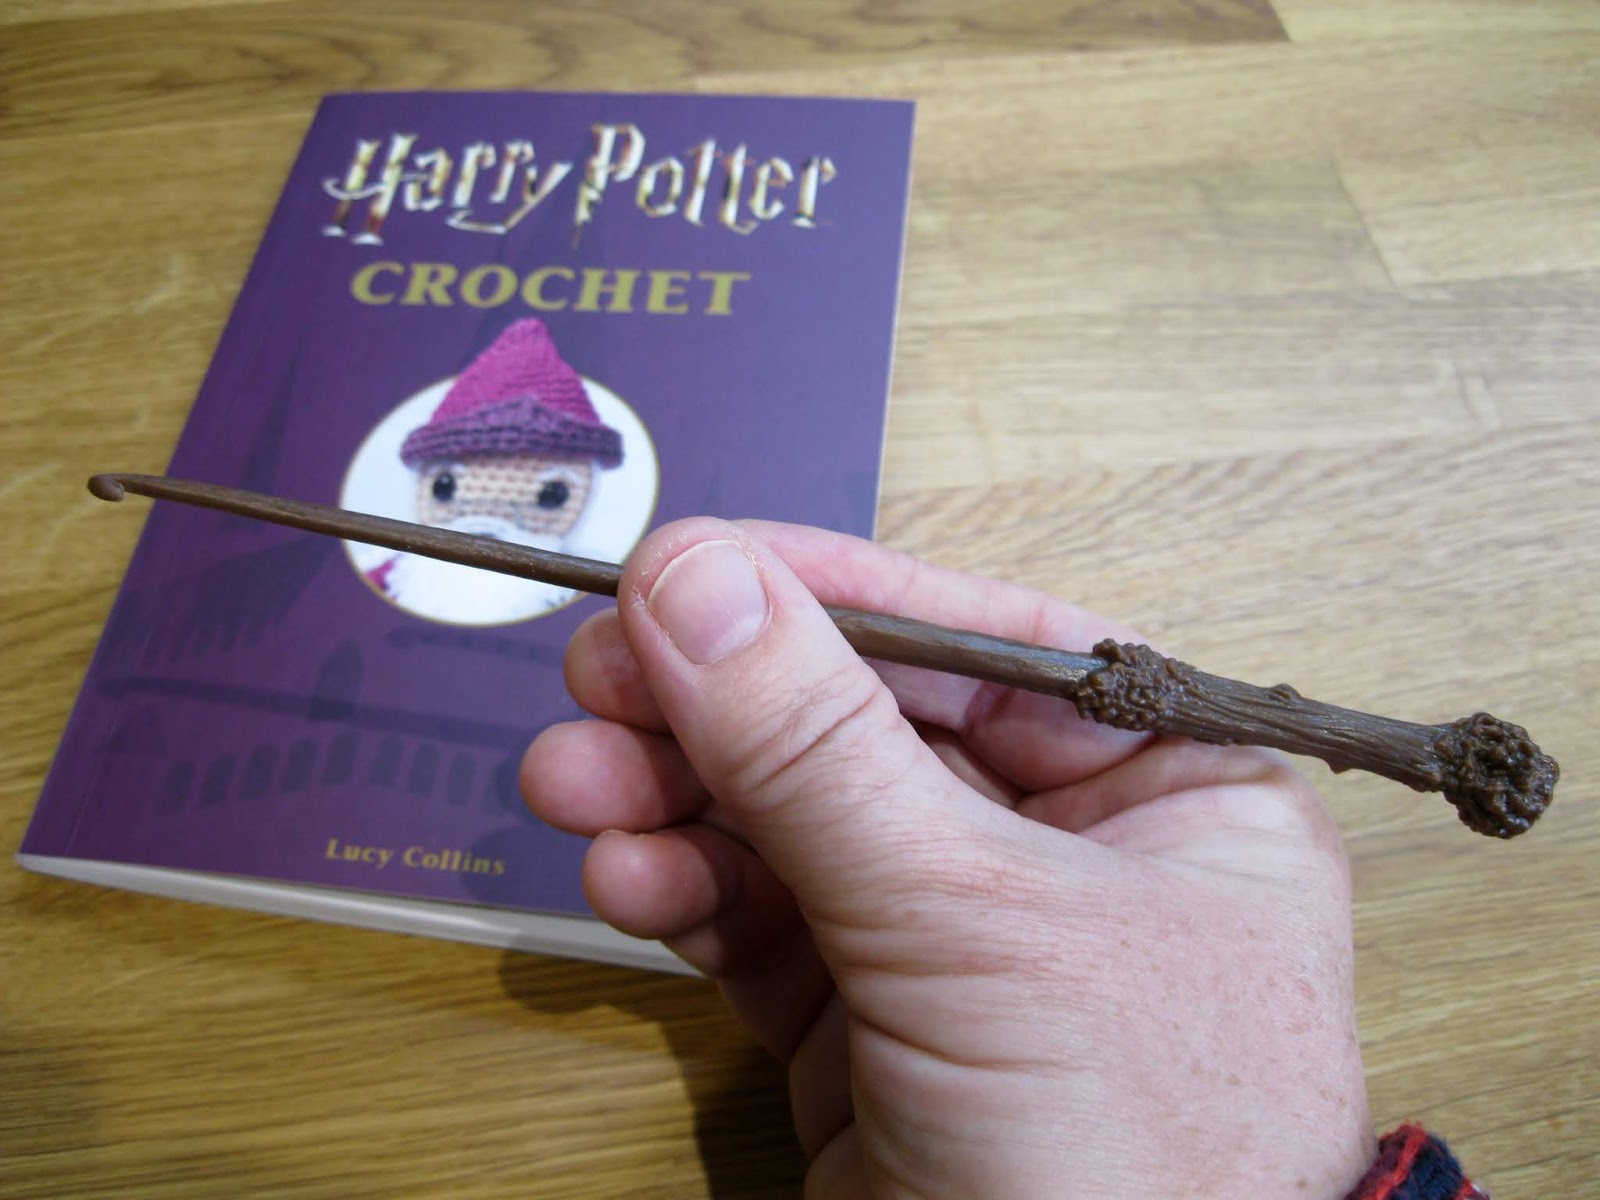 Harry Potter: Crochet Wizardry - The Yarn Patch